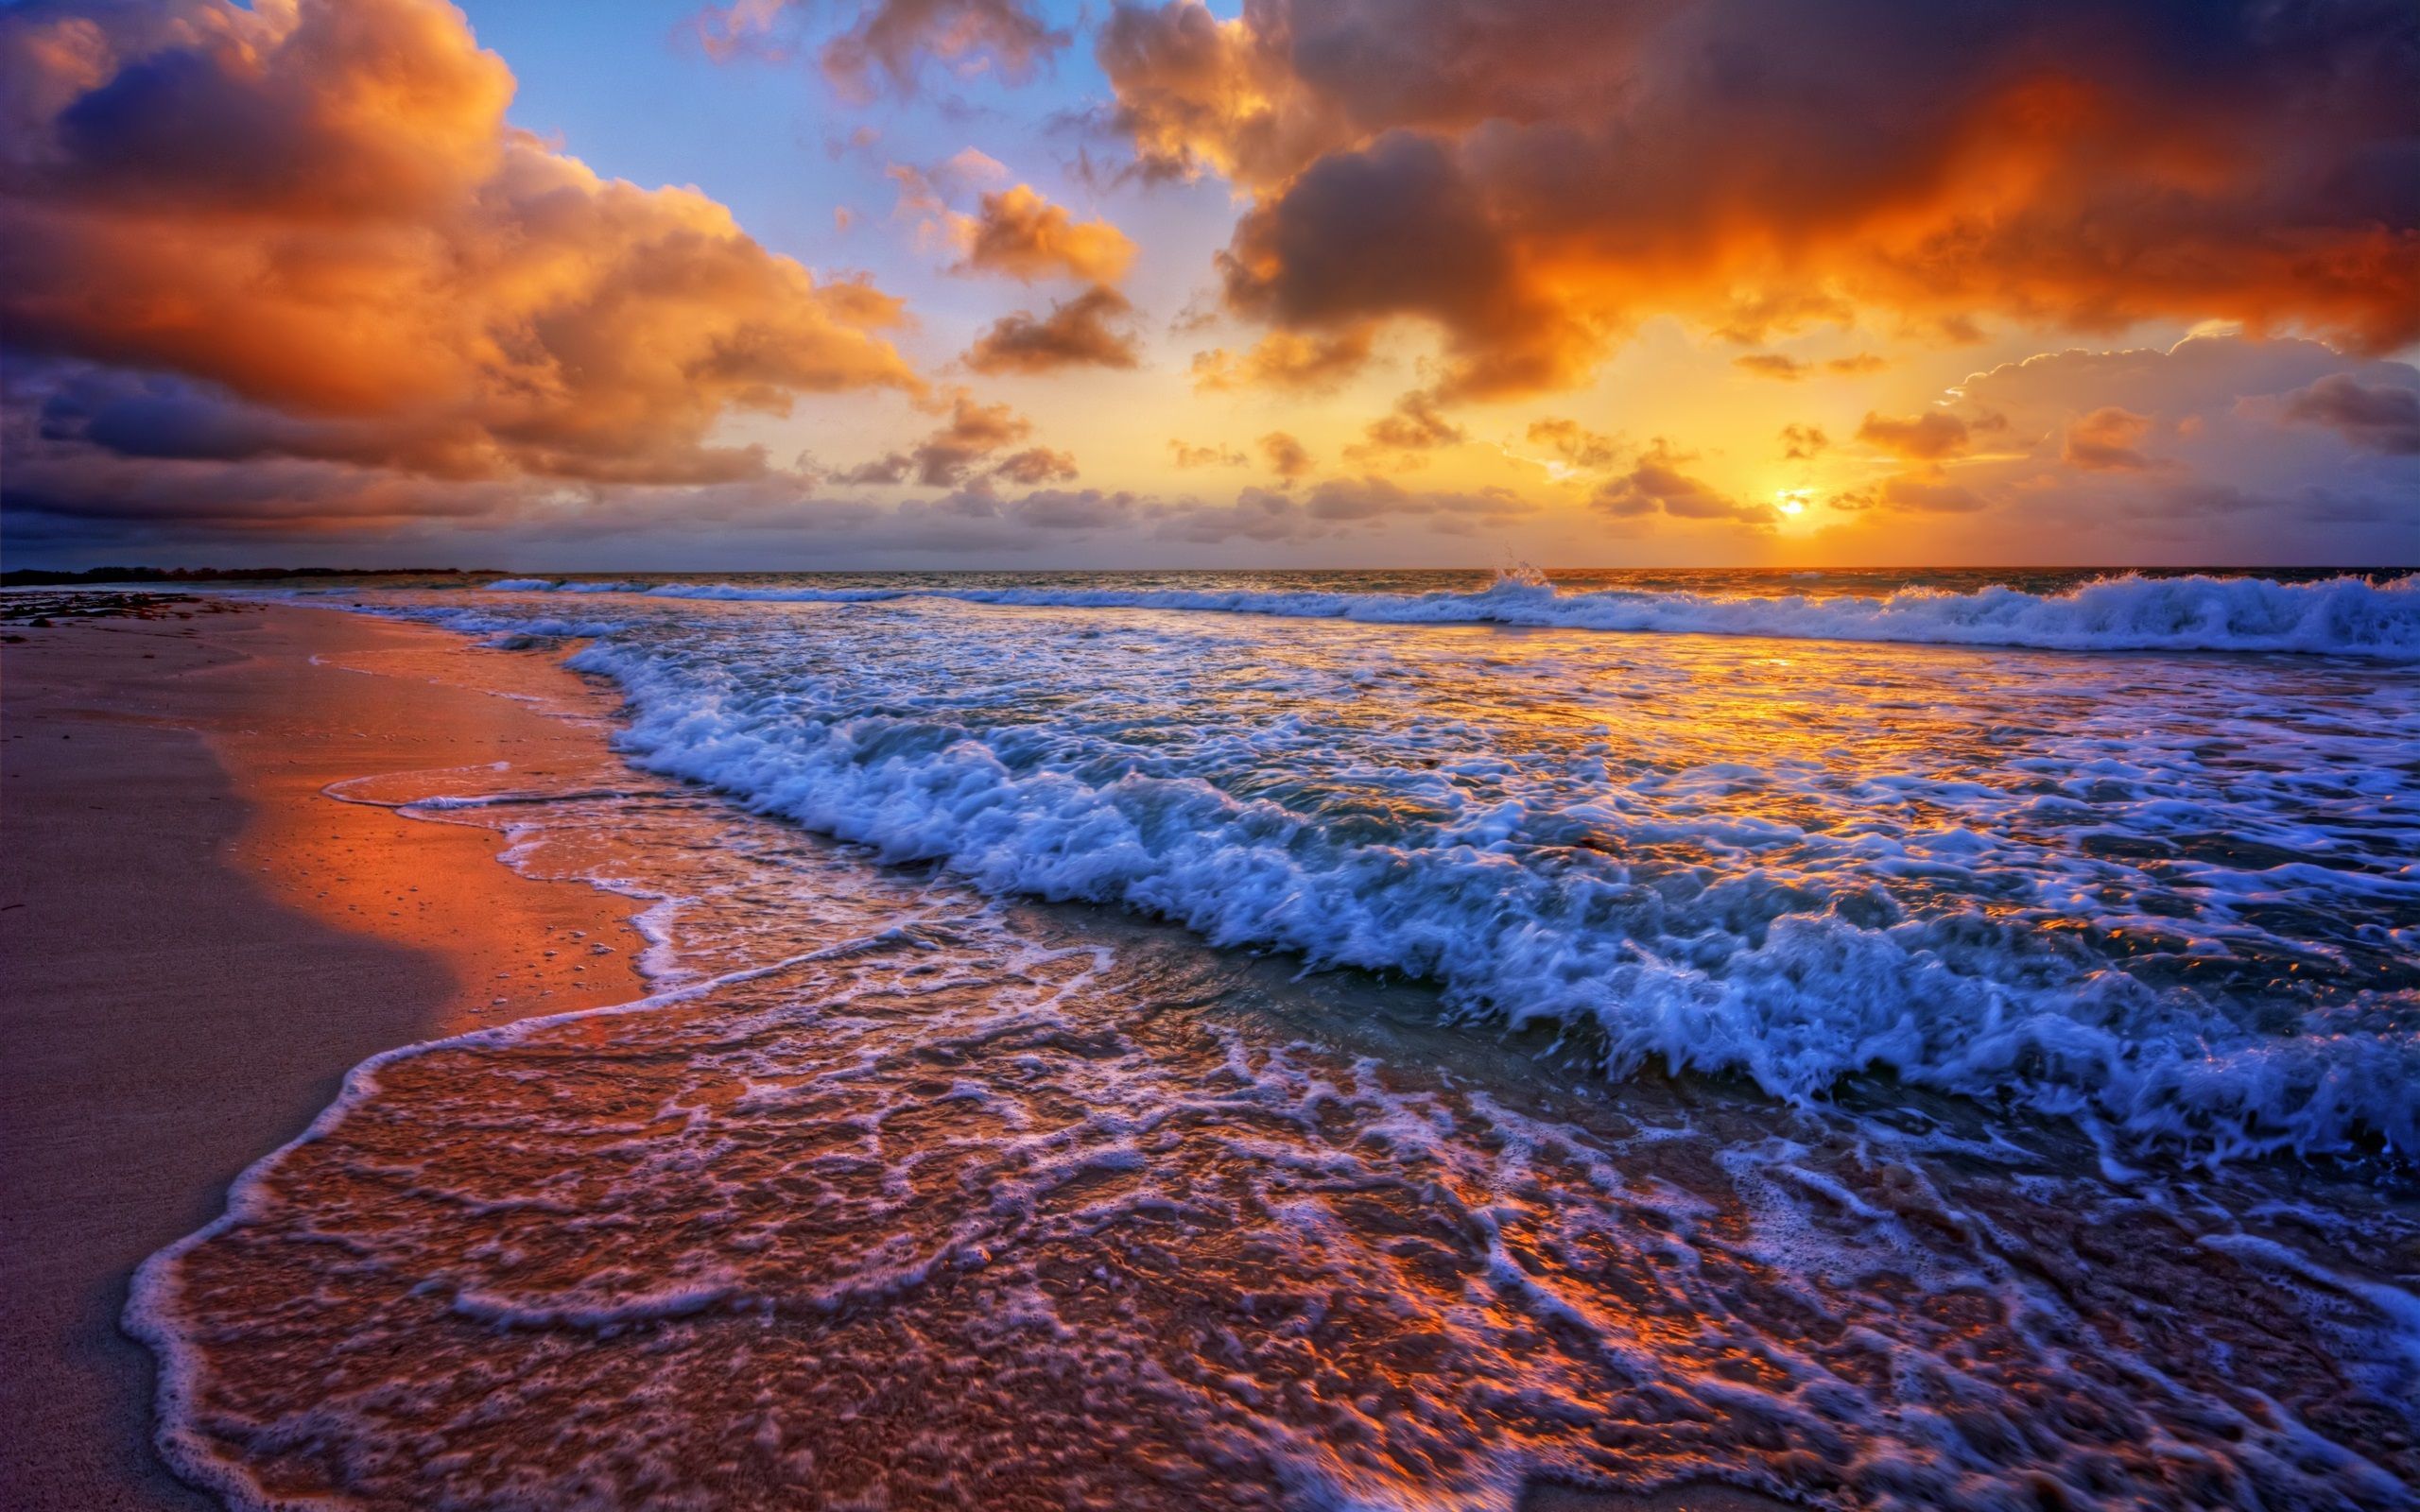  Sonnenuntergang Hintergrundbild 2560x1600. Sonnenuntergang, Meer, Küste, Surfen, Wellen, Wolken Hintergrundbilder. Beach sunset wallpaper, Beach wallpaper, Myrtle beach vacation